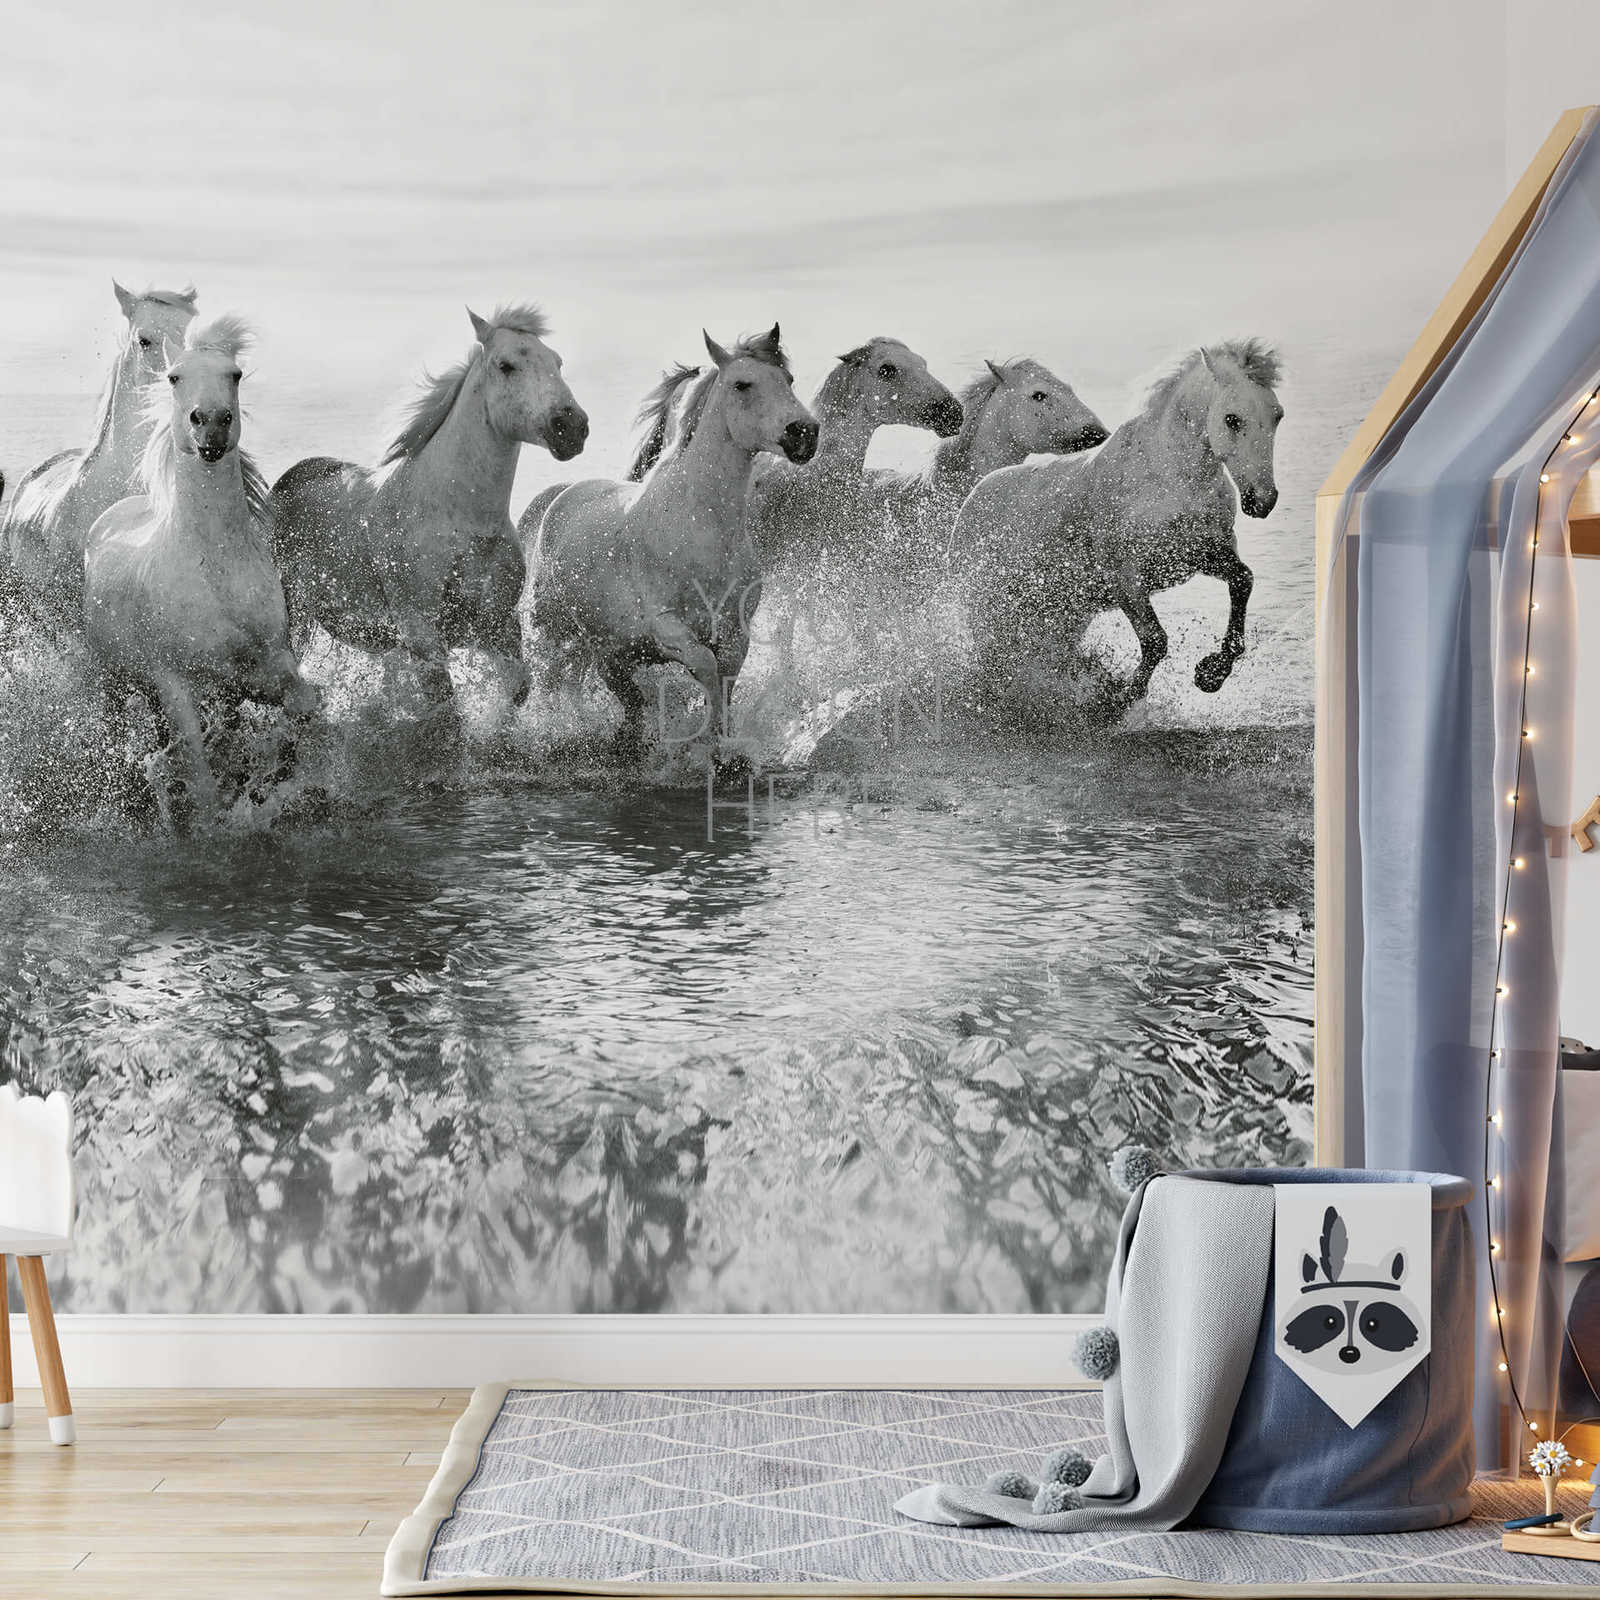             Photo wallpaper white horses in water - white, grey, black
        